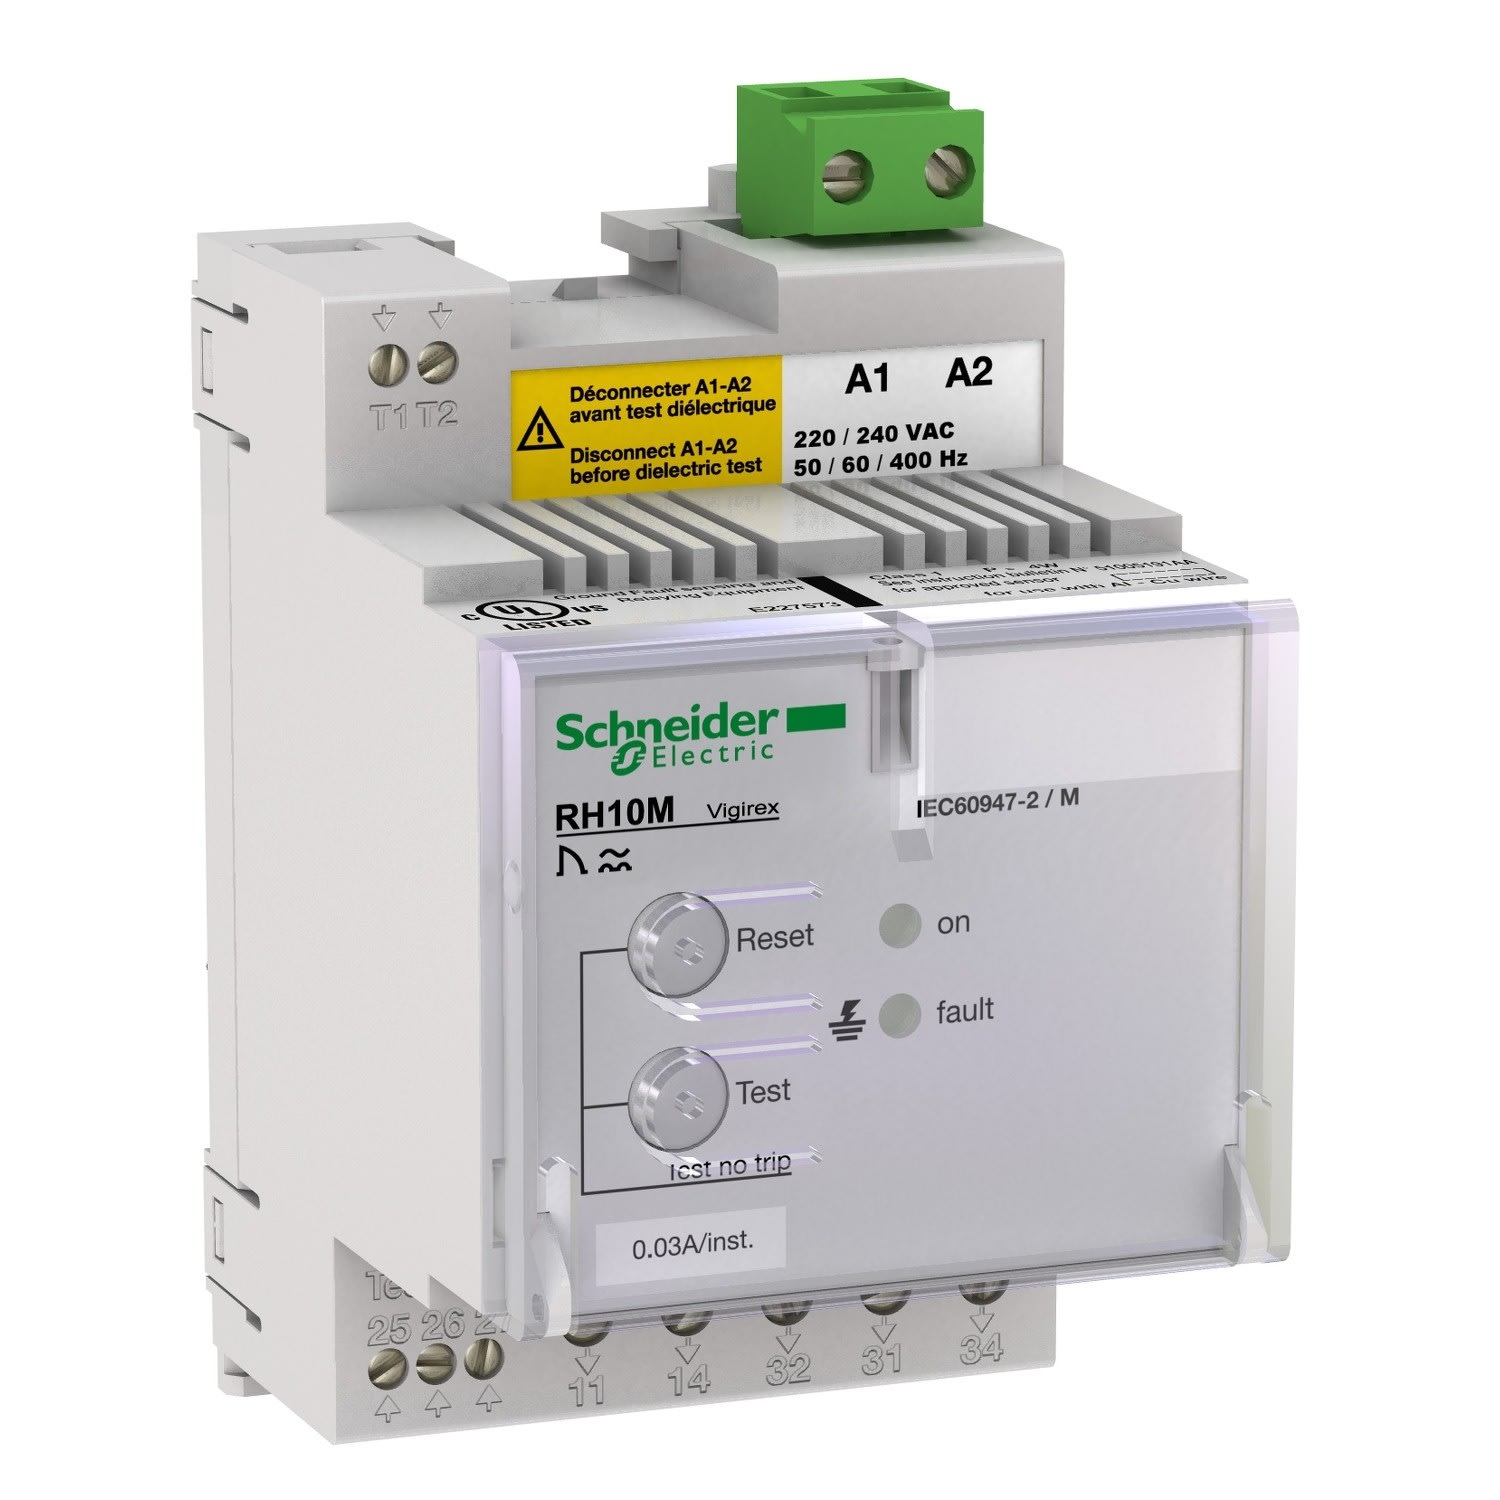 Schneider Electric - Vigirex RH10M 380-415VAC sensibilite 0,03A instantane